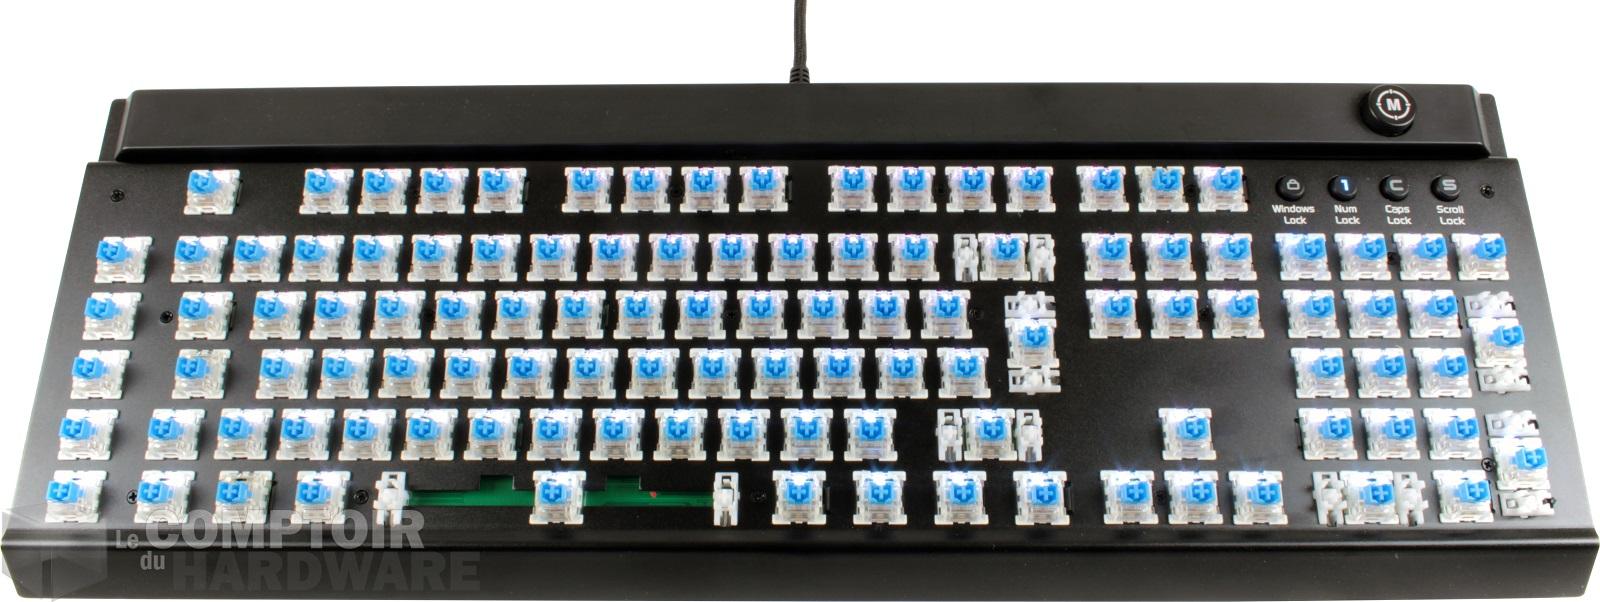 amazon basics : le clavier